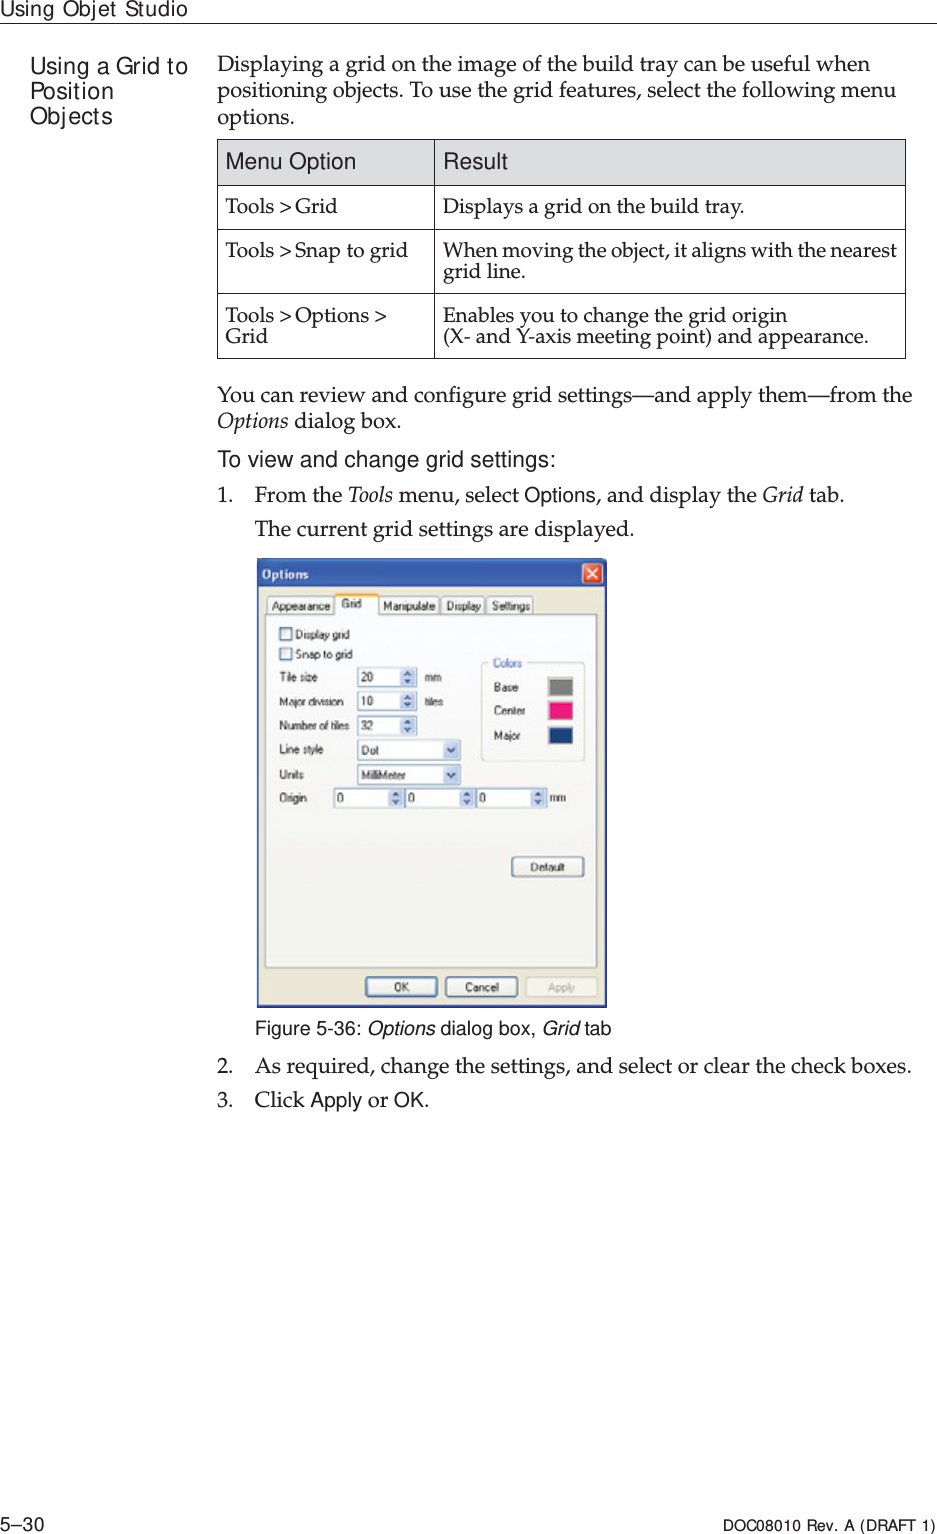 Using Objet Studio5–30 DOC08010 Rev. A (DRAFT 1)Using a Grid to Position ObjectsDisplayingȱaȱgridȱonȱtheȱimageȱofȱtheȱbuildȱtrayȱcanȱbeȱusefulȱwhenȱpositioningȱobjects.ȱToȱuseȱtheȱgridȱfeatures,ȱselectȱtheȱfollowingȱmenuȱoptions.ȱYouȱcanȱreviewȱandȱconfigureȱgridȱsettings—andȱapplyȱthem—fromȱtheȱOptionsȱdialogȱbox.To view and change grid settings:1. FromȱtheȱToolsȱmenu,ȱselectȱOptions,ȱandȱdisplayȱtheȱGridȱtab.Theȱcurrentȱgridȱsettingsȱareȱdisplayed.Figure 5-36: Options dialog box, Grid tab2. Asȱrequired,ȱchangeȱtheȱsettings,ȱandȱselectȱorȱclearȱtheȱcheckȱboxes.3. ClickȱApplyȱorȱOK.Menu Option ResultToolsȱ&gt;ȱGrid Displaysȱaȱgridȱonȱtheȱbuildȱtray.Toolsȱ&gt;ȱSnapȱtoȱgrid Whenȱmovingȱtheȱobject,ȱitȱalignsȱwithȱtheȱnearestȱgridȱline.Toolsȱ&gt;ȱOptionsȱ&gt;ȱGrid Enablesȱyouȱtoȱchangeȱtheȱgridȱoriginȱ(XȬȱandȱYȬaxisȱmeetingȱpoint)ȱandȱappearance.